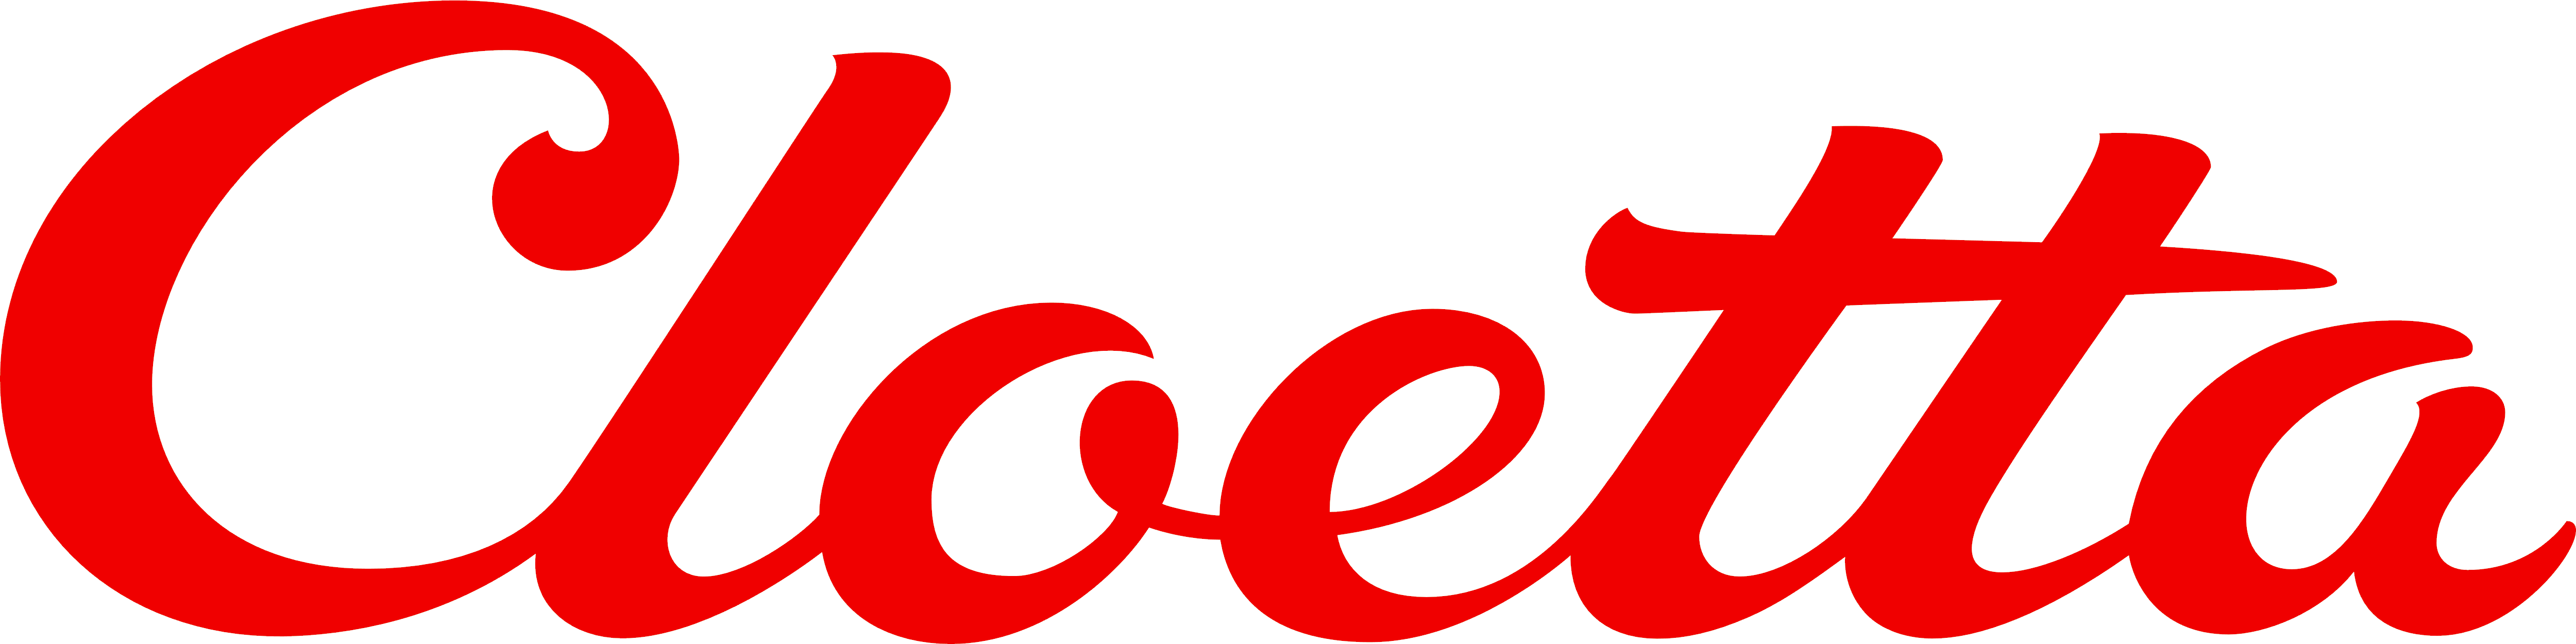 Cloetta – Logos Download